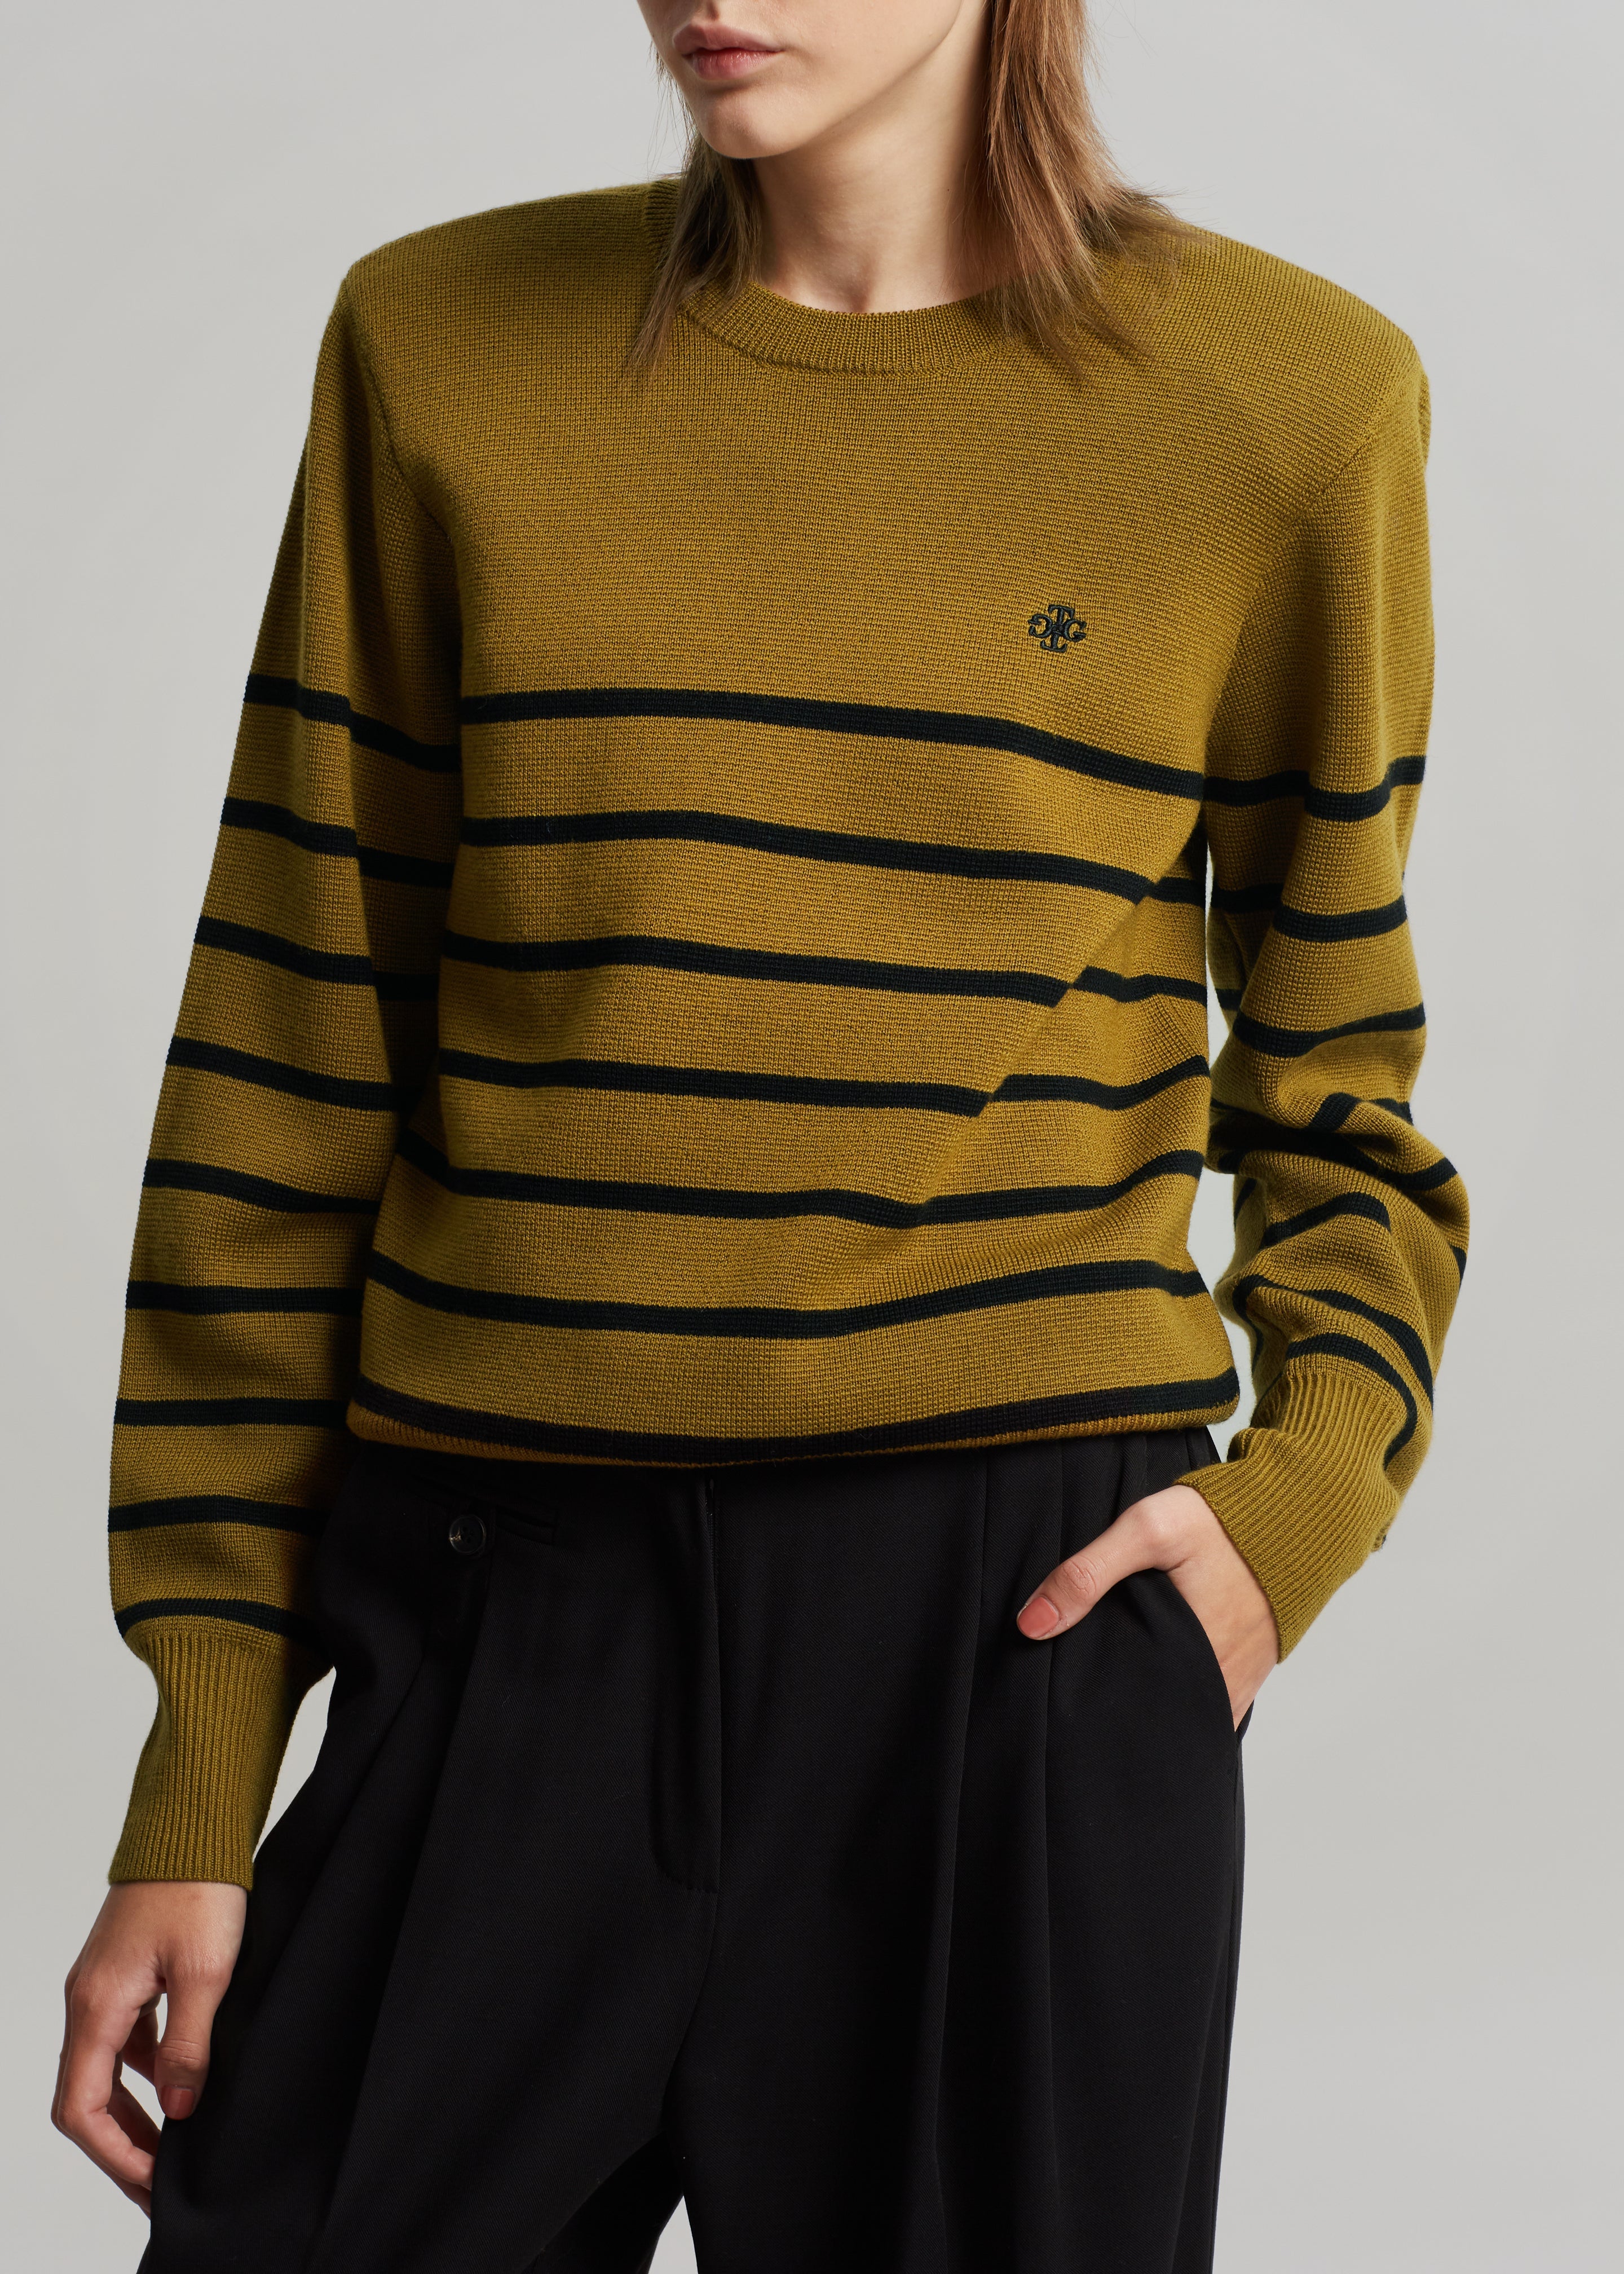 The Garment St Moritz Sweater - Mustard/Black Stripes - 3